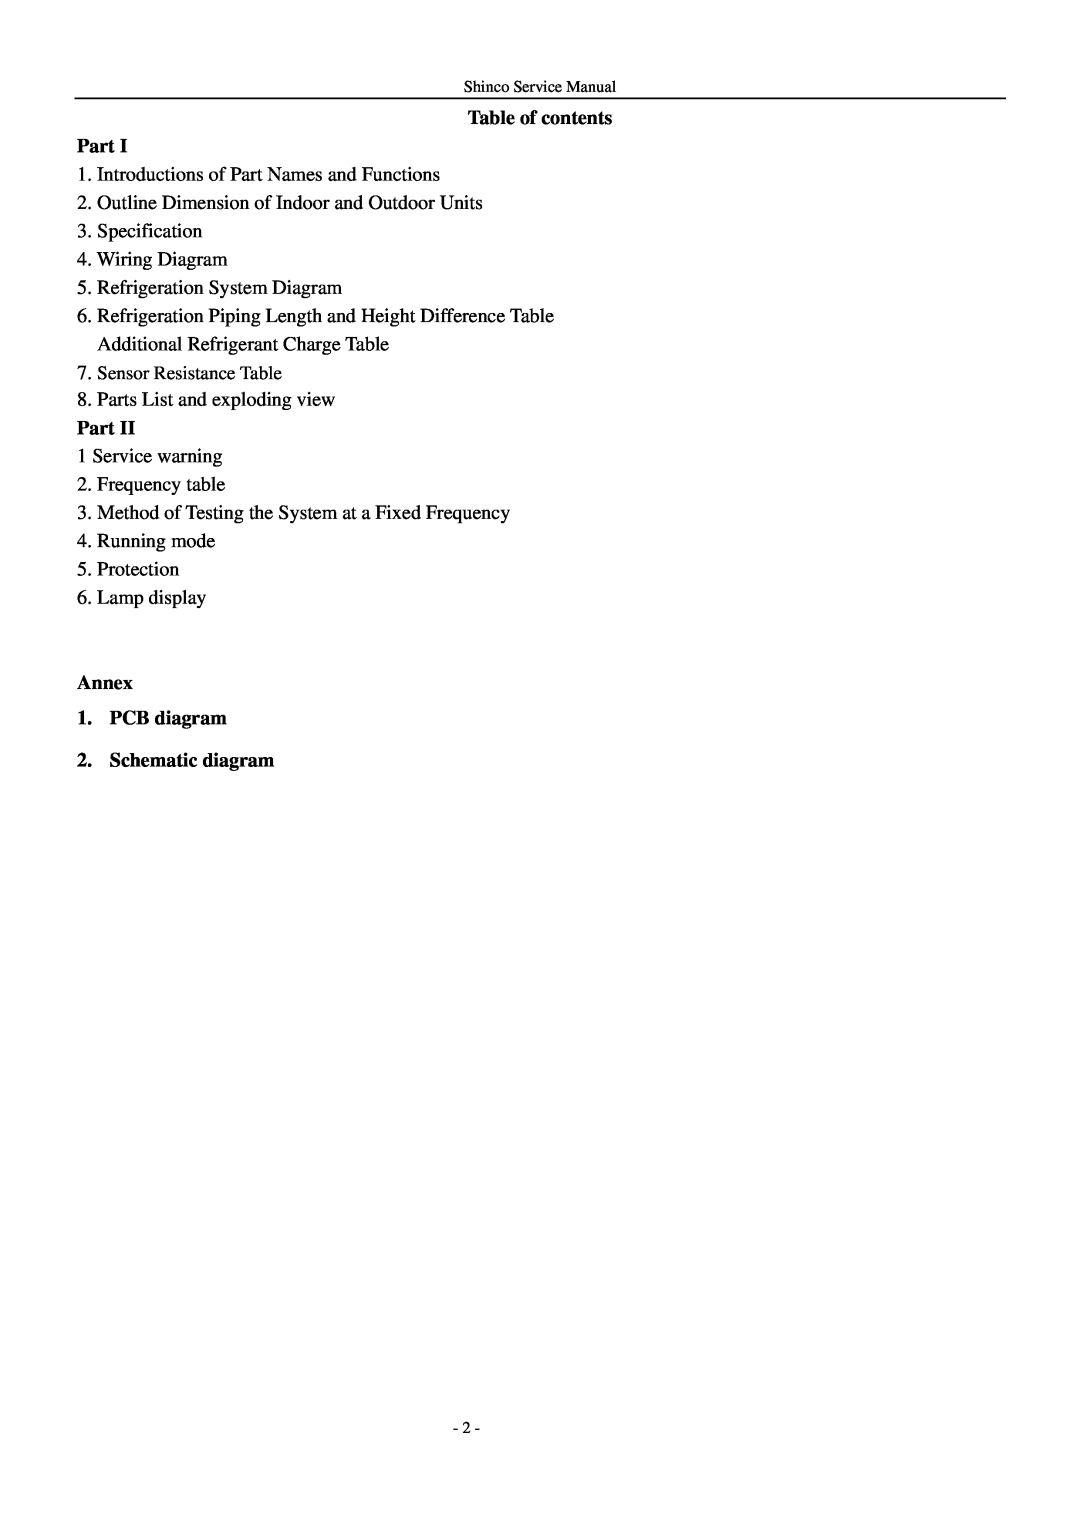 Shinco KFR-25GWZ BM service manual Table of contents Part, Annex 1.PCB diagram 2.Schematic diagram 